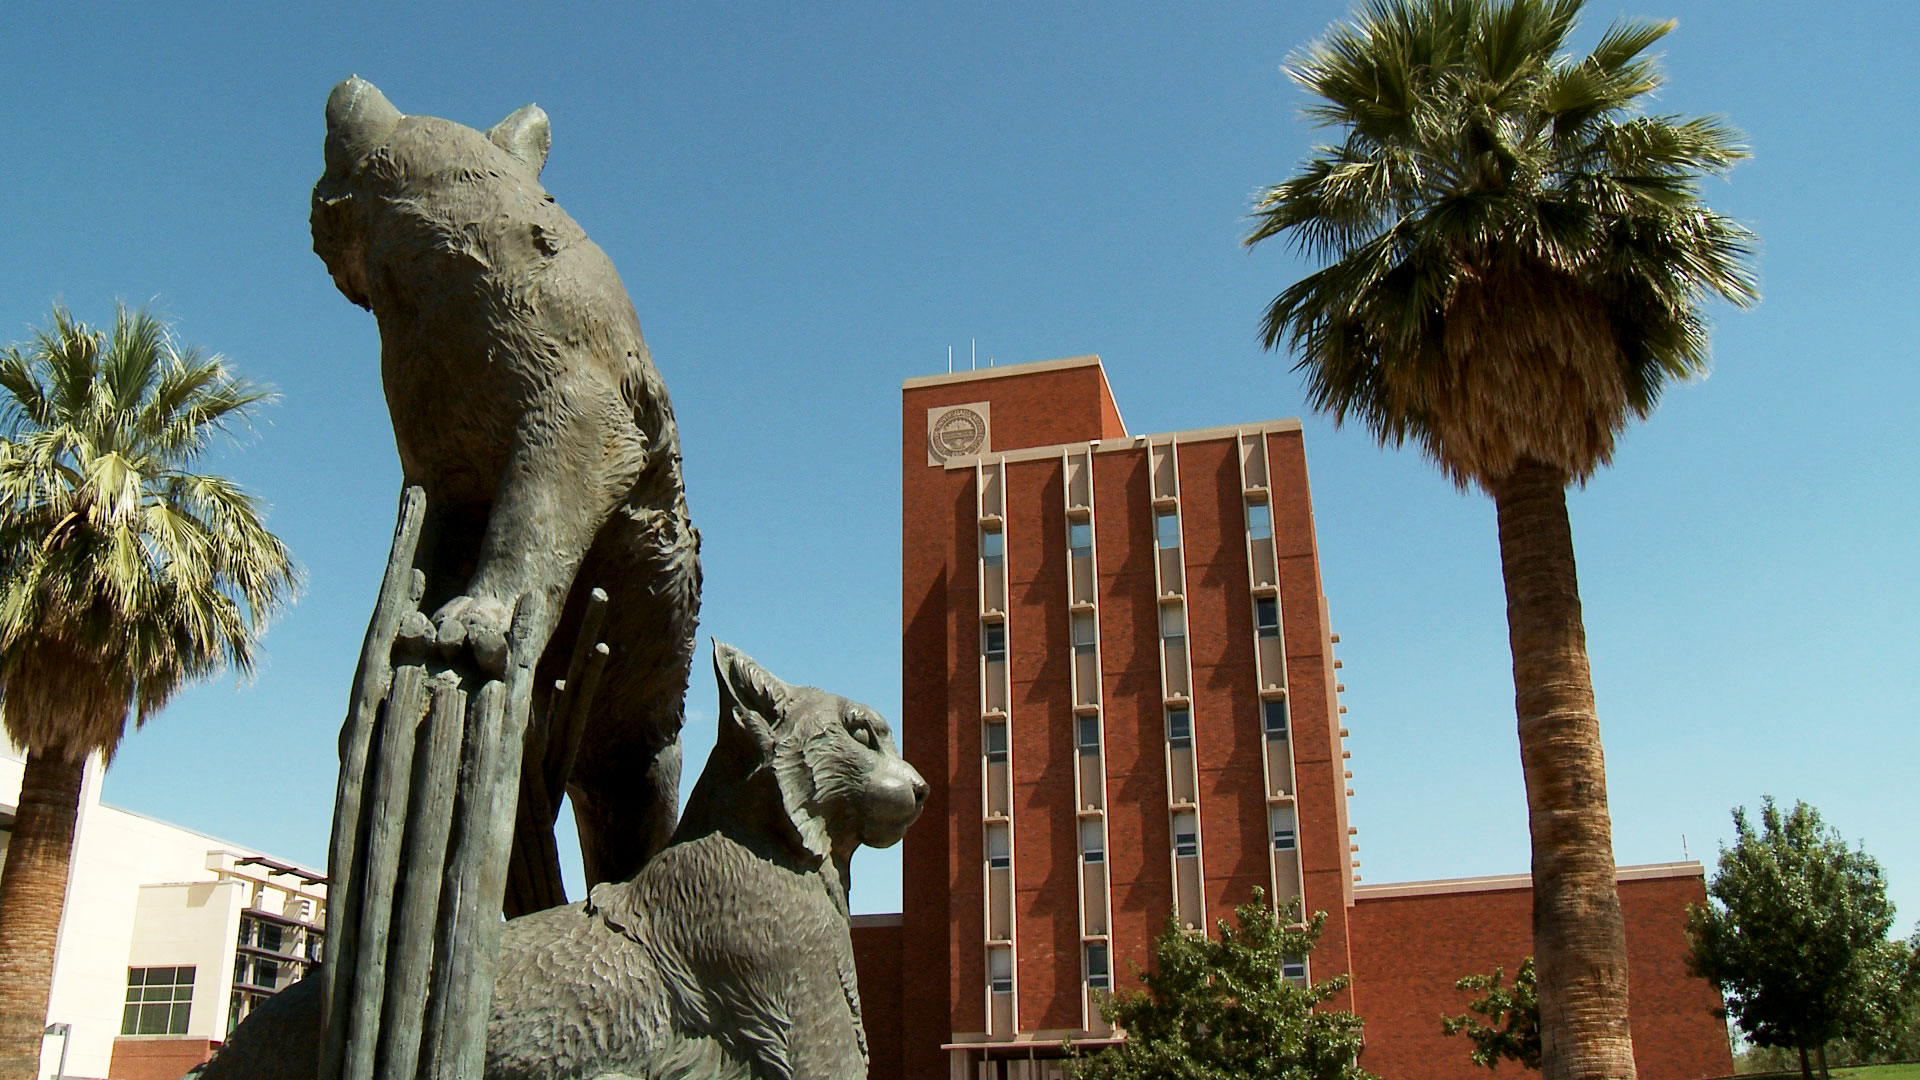 The University of Arizona Administration building. 